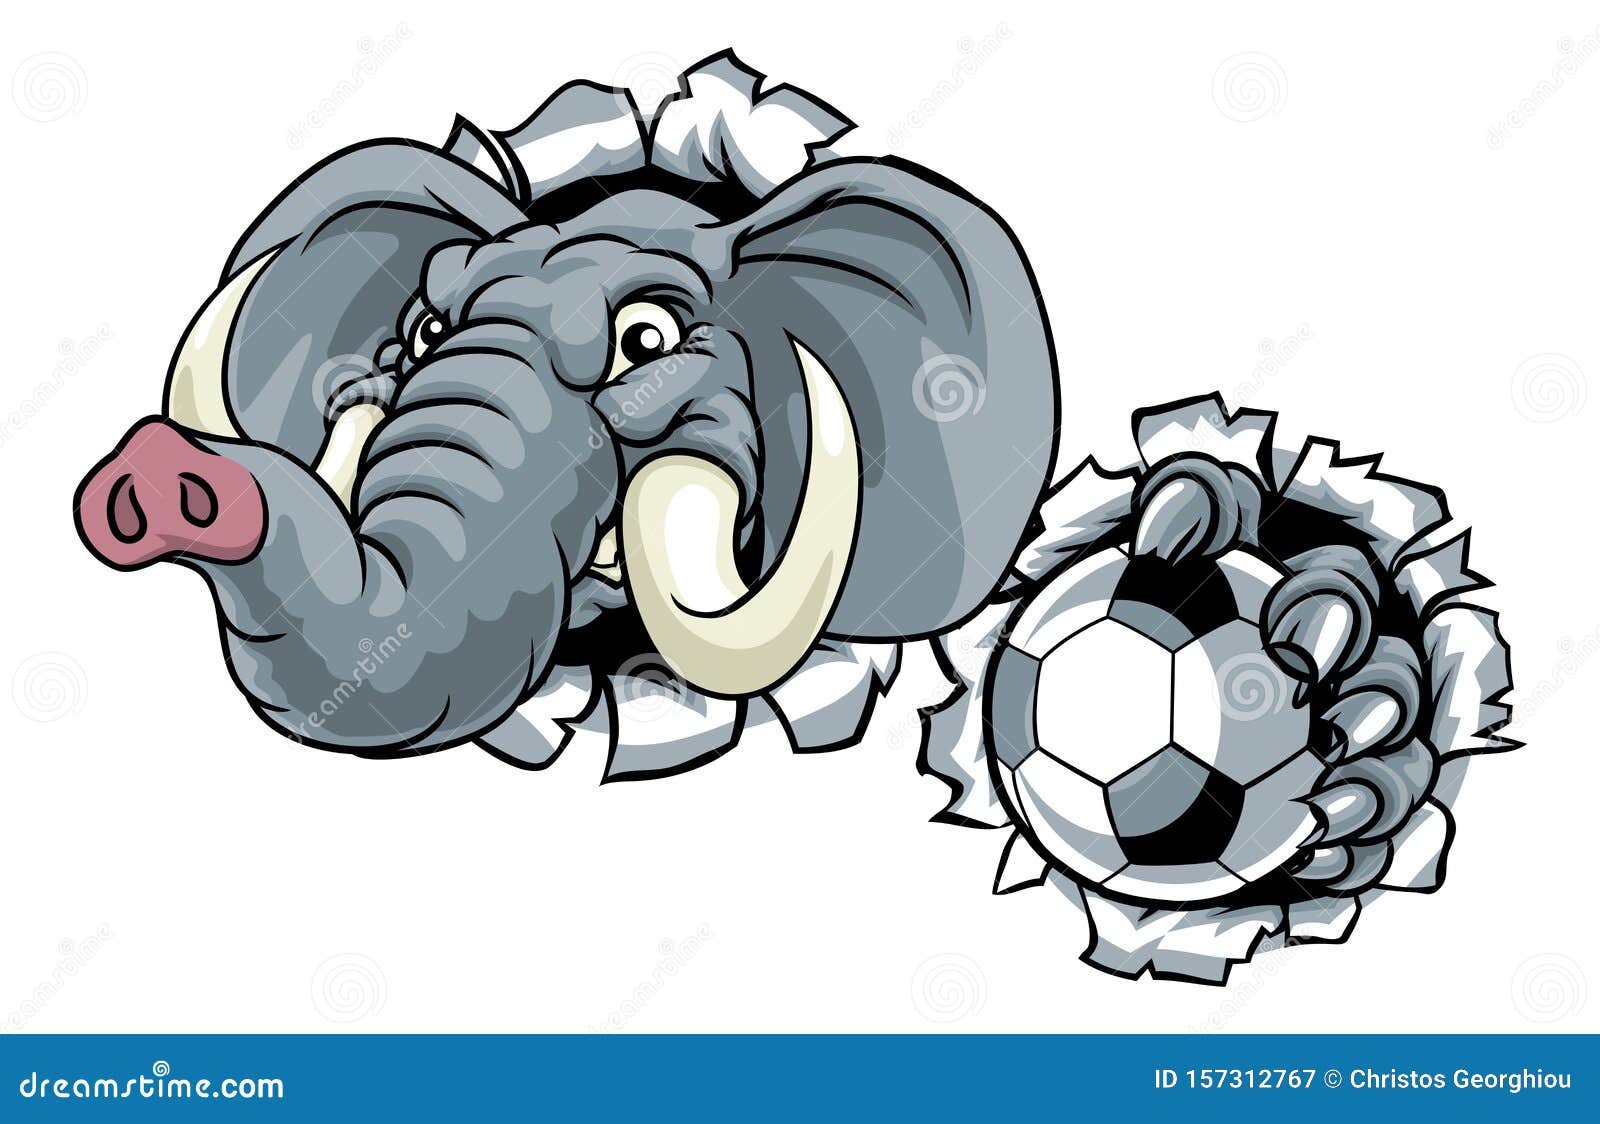 elephant soccer football ball sports mascot